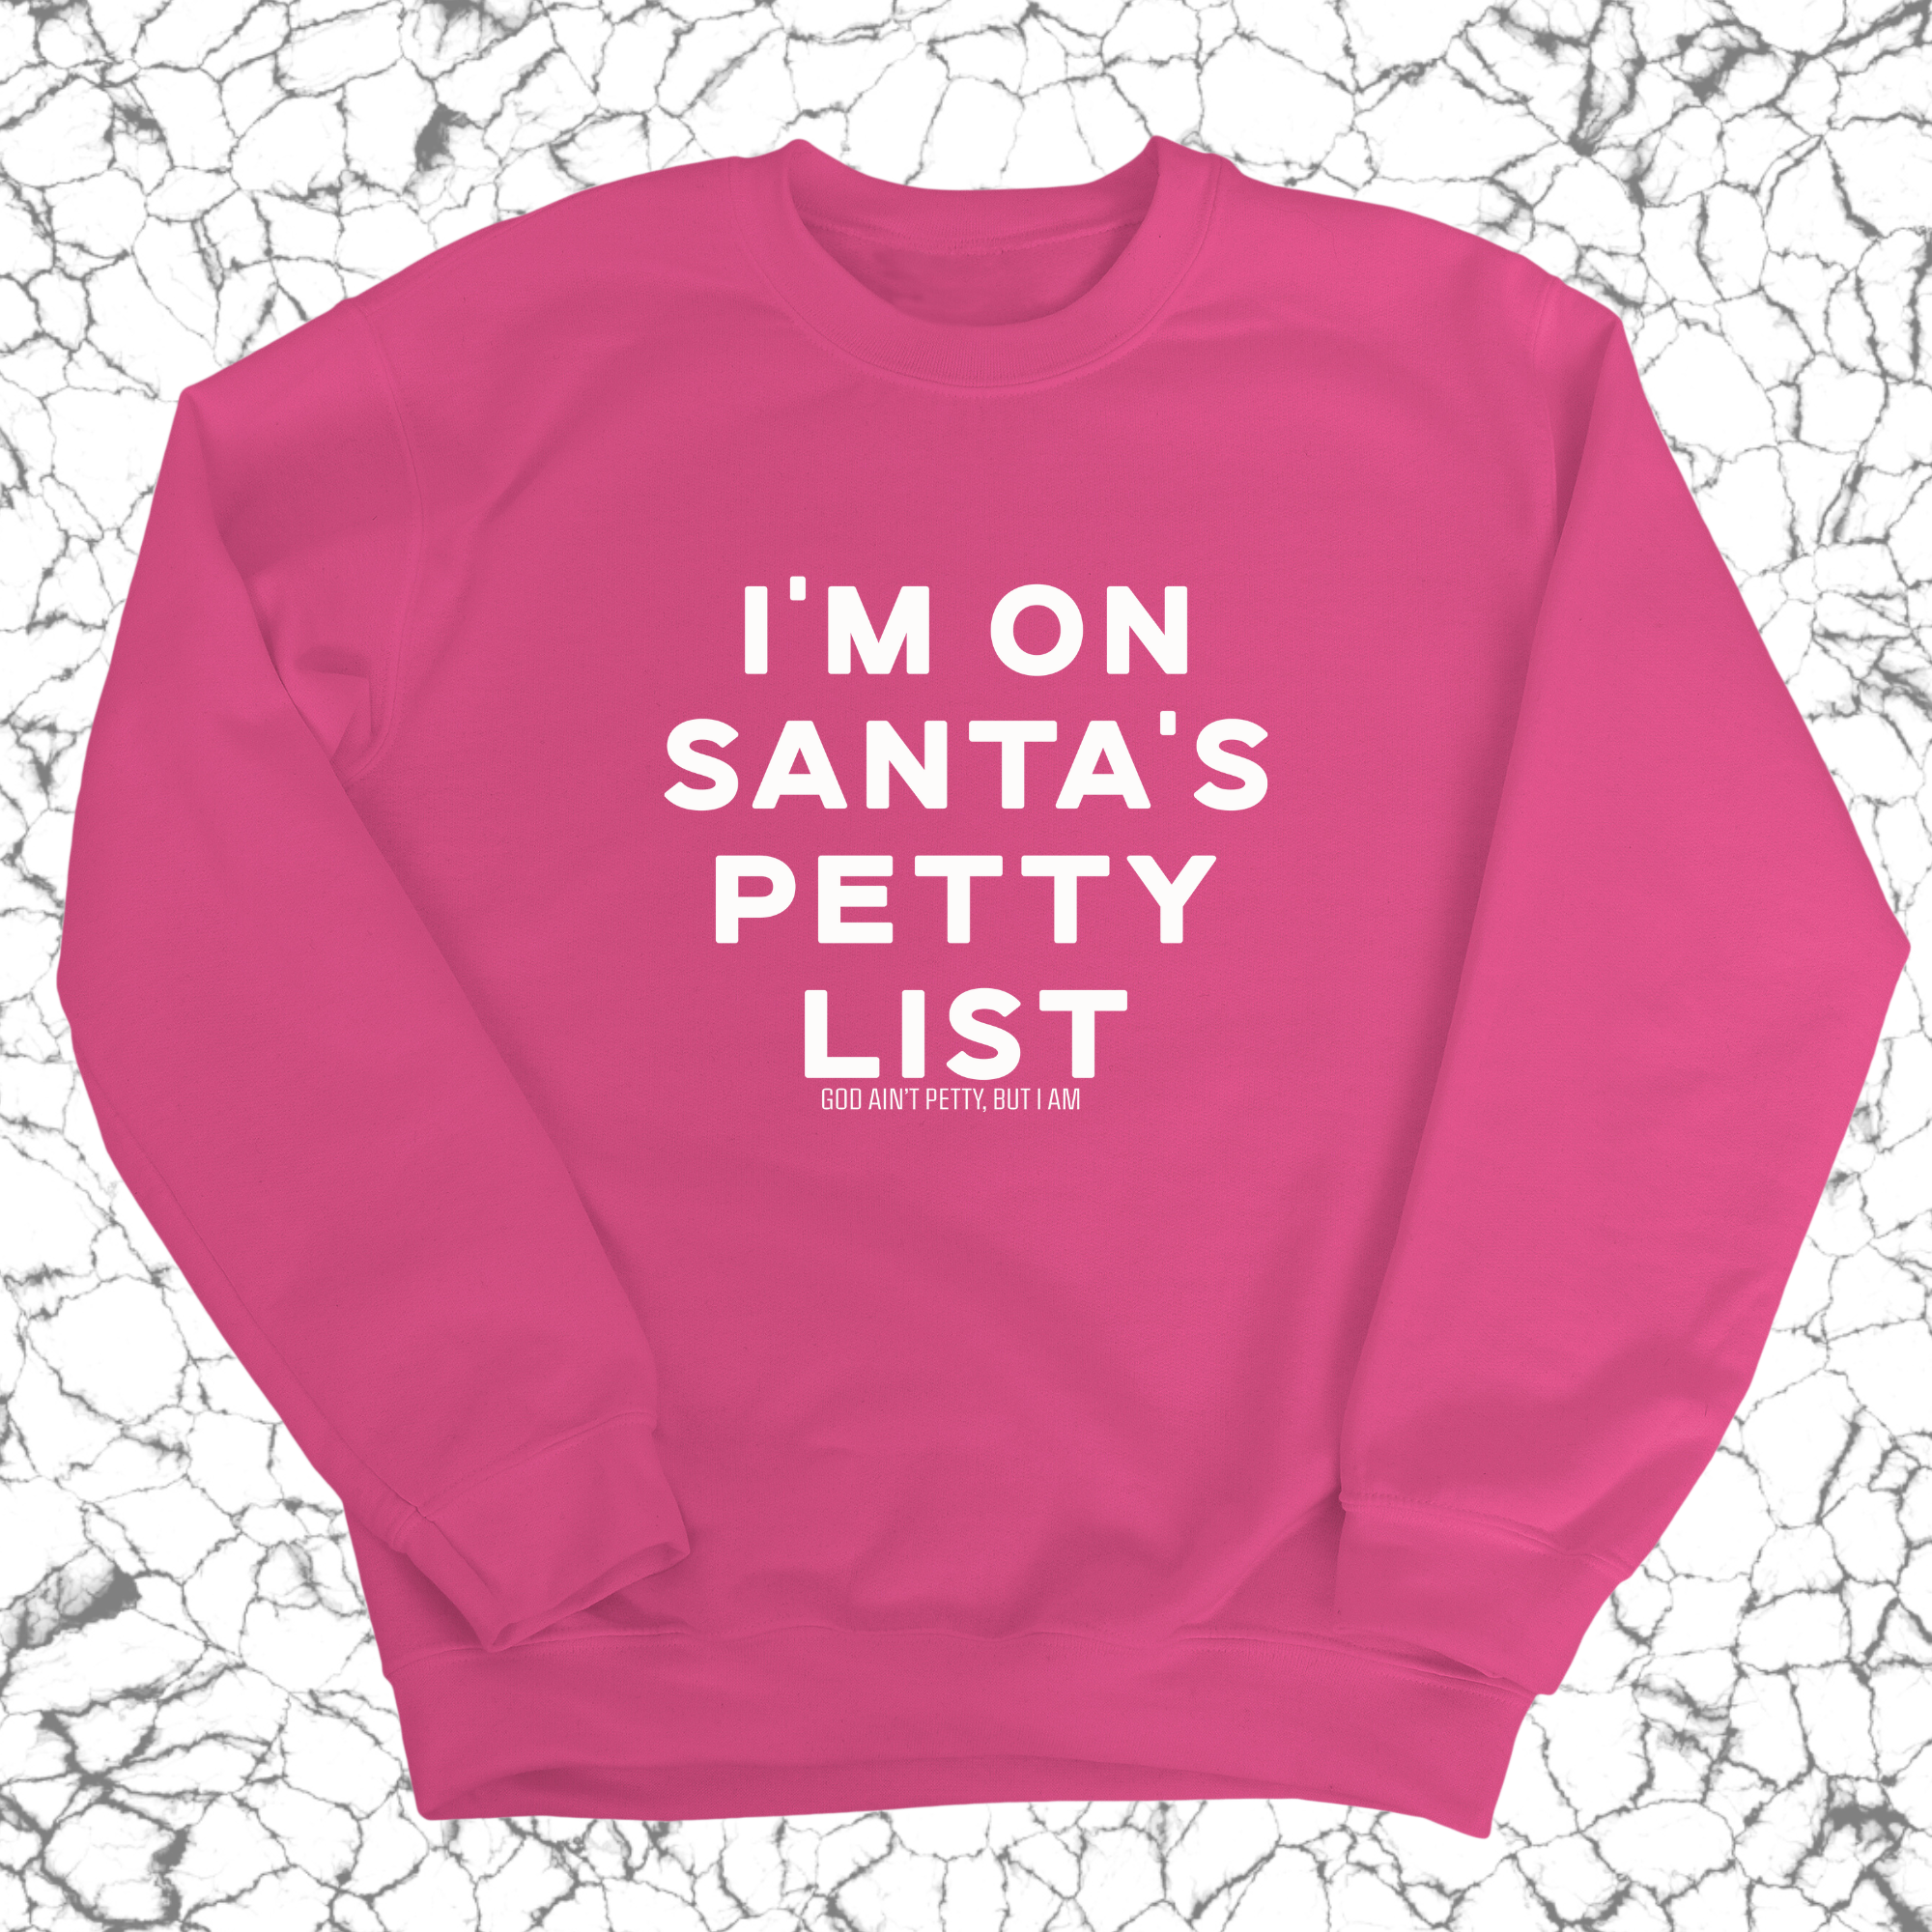 I'm on Santa's Petty List Unisex Sweatshirt-Sweatshirt-The Original God Ain't Petty But I Am